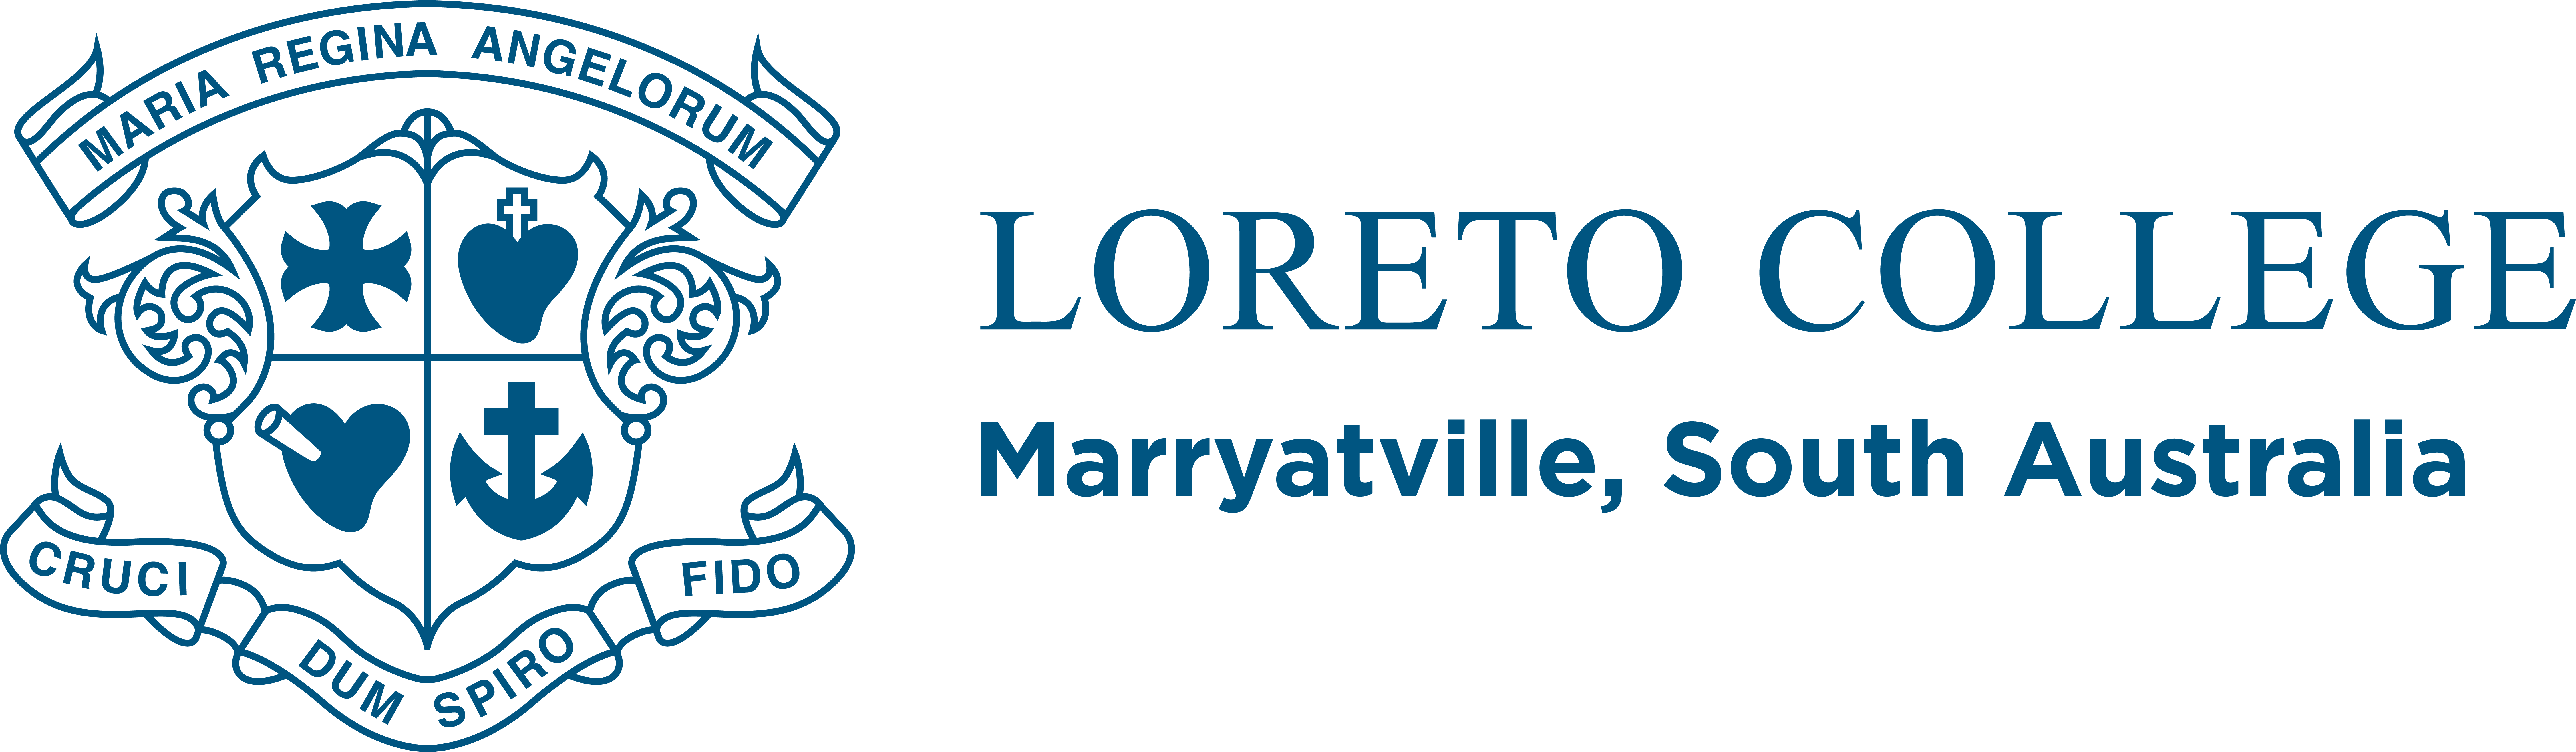 loreto-logo-header-dark